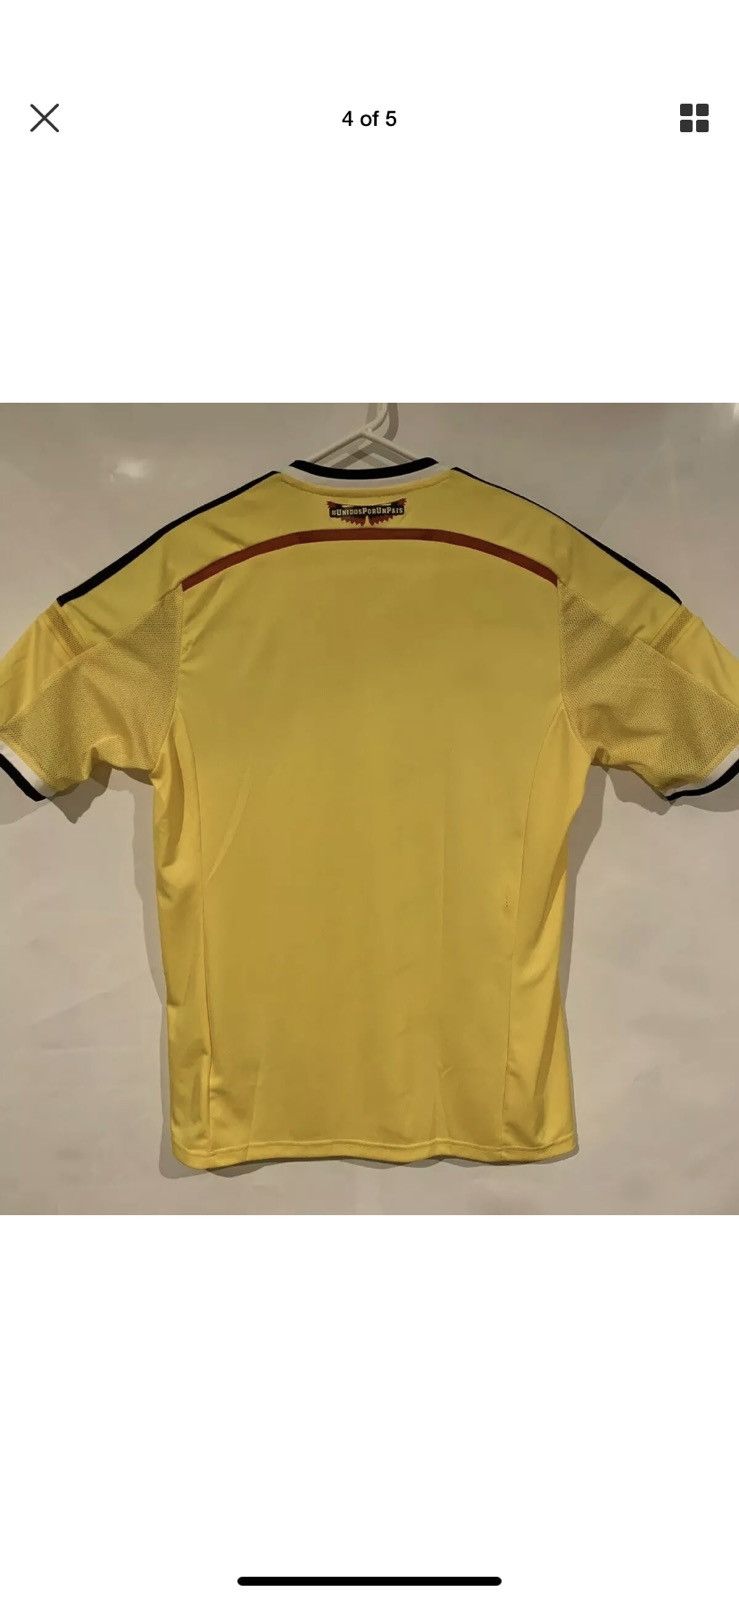 Adidas Adidas Columbia soccer jersey yellow rare authentic Size US M / EU 48-50 / 2 - 4 Thumbnail